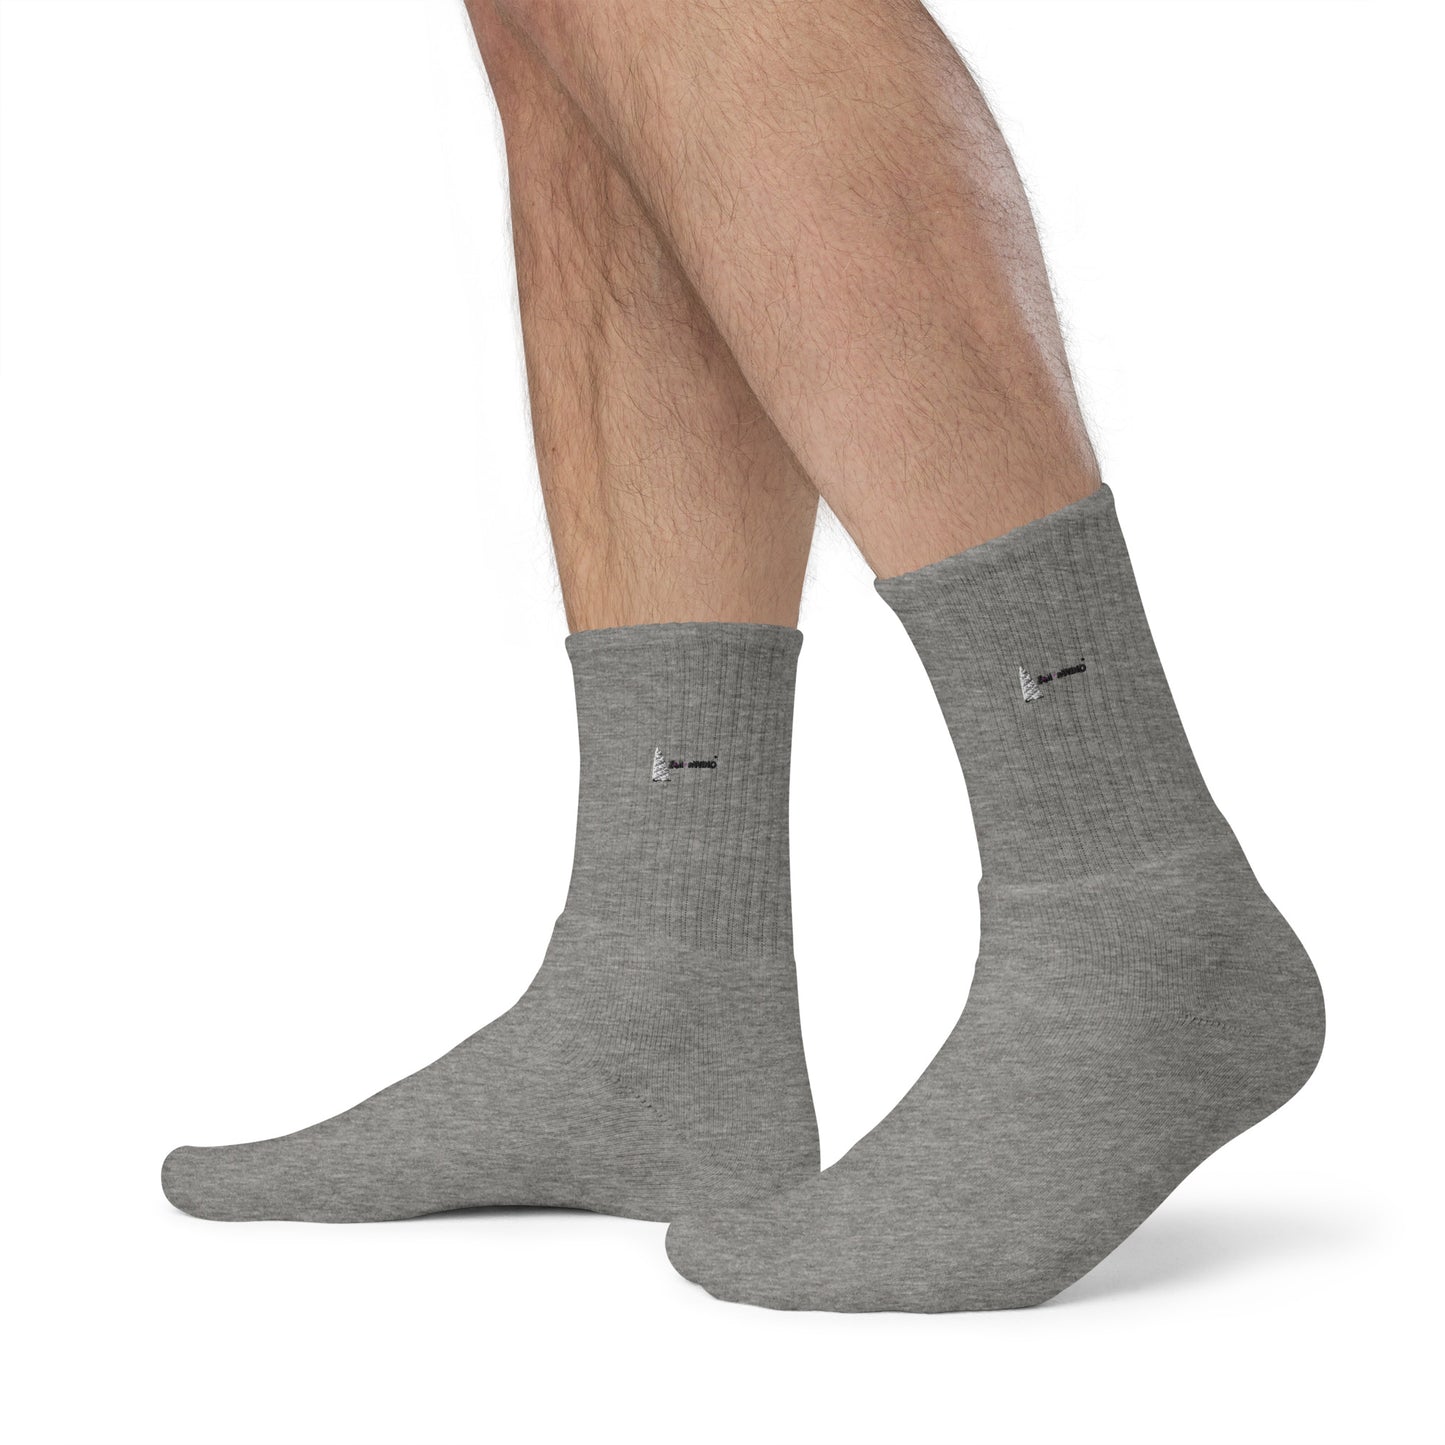 ZW Bestickte Socks Men ANR:12003 ZeilenWind